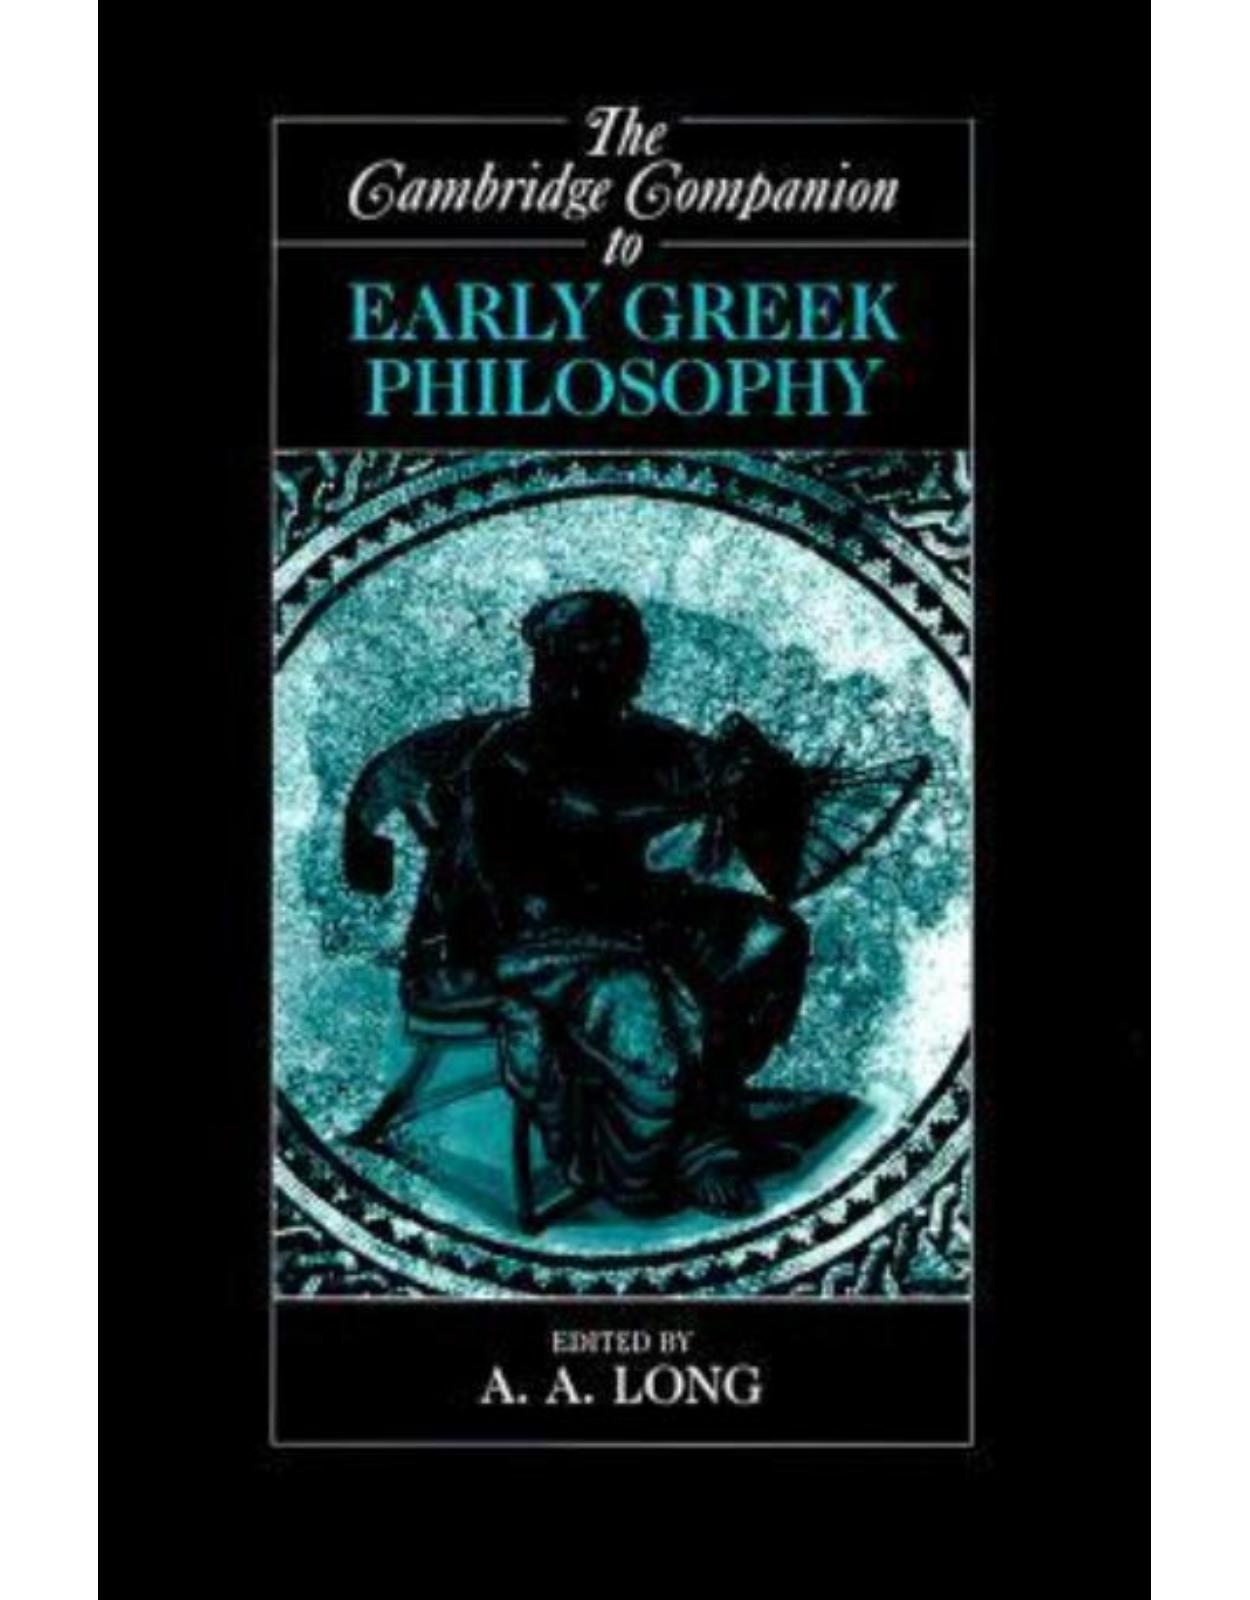 The Cambridge Companion to Early Greek Philosophy (Cambridge Companions to Philosophy)